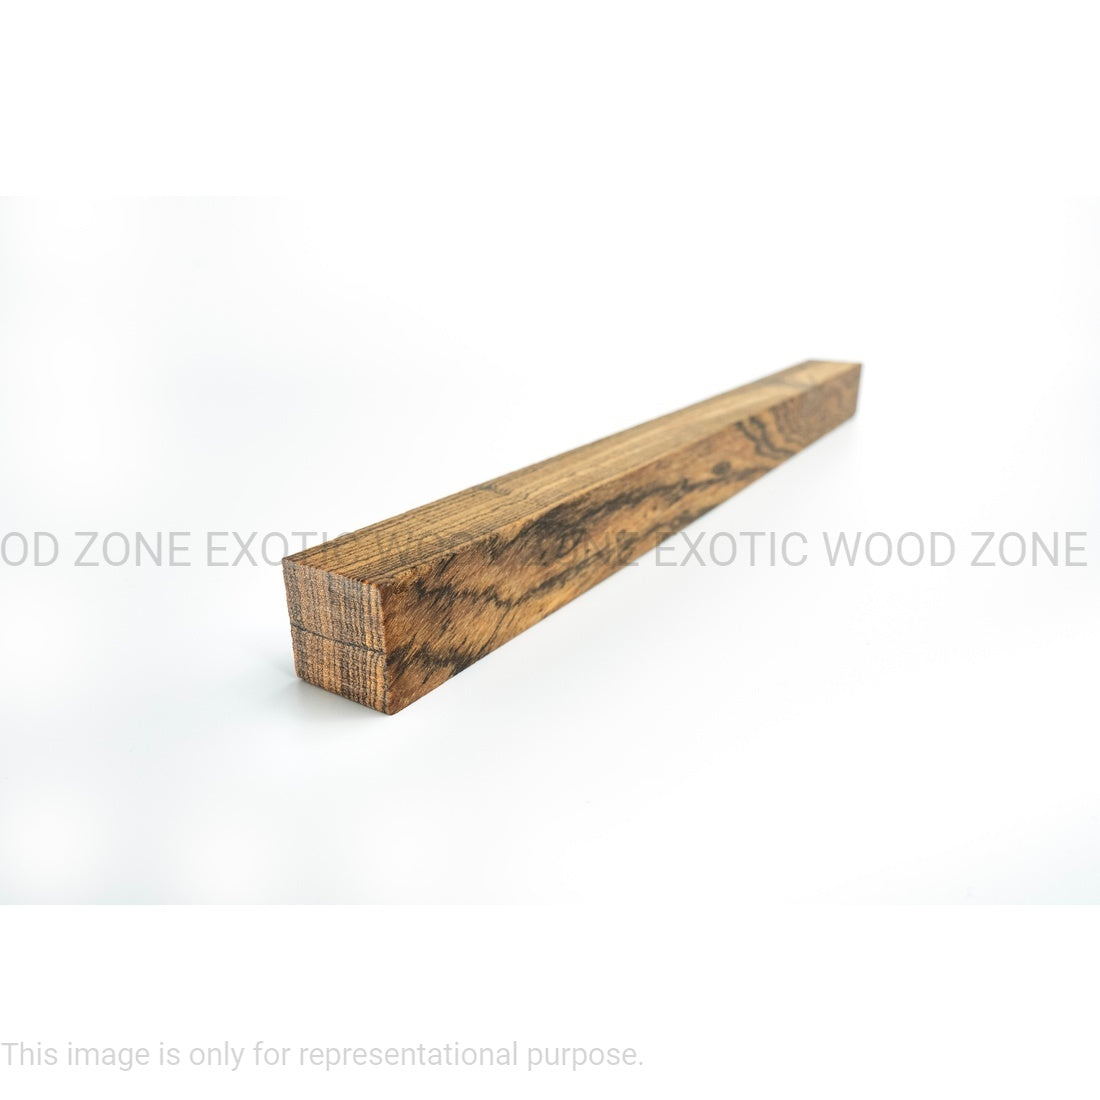 Bocote Hobby Wood/ Turning Wood Blanks 1 x 1 x 12 inches - Exotic Wood Zone - Buy online Across USA 